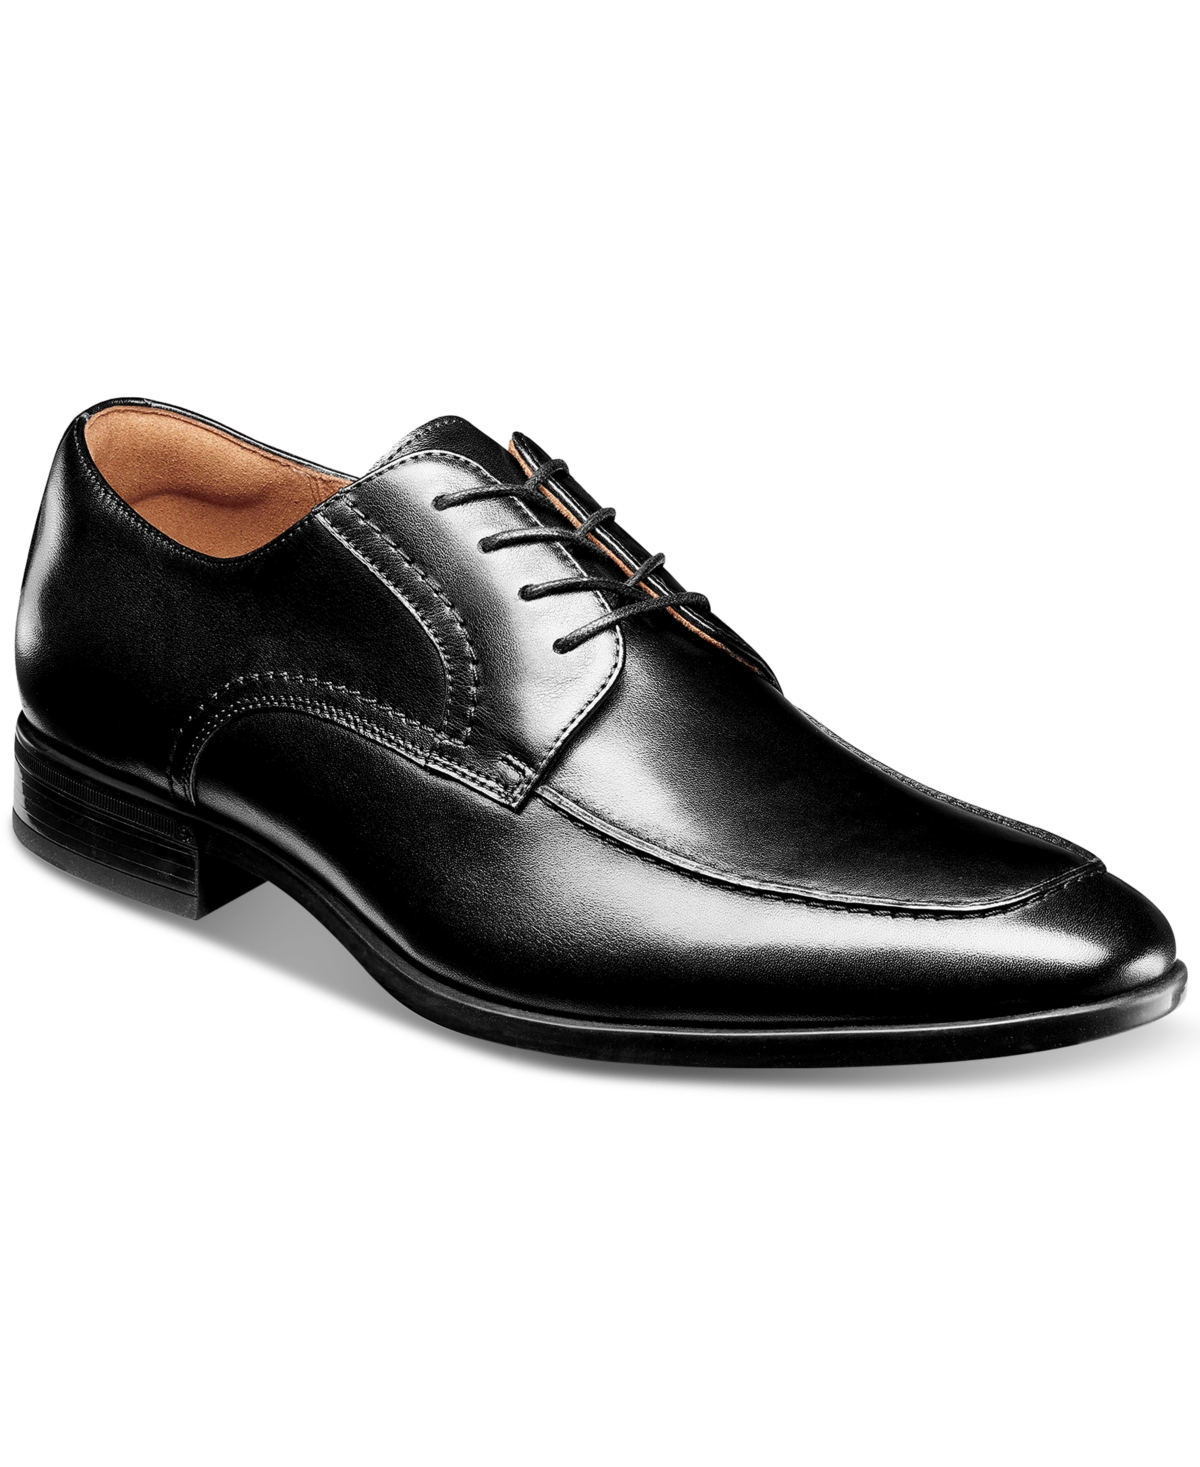 Men's Pregamo Moc-Toe Oxford Dress Shoe - Cognac